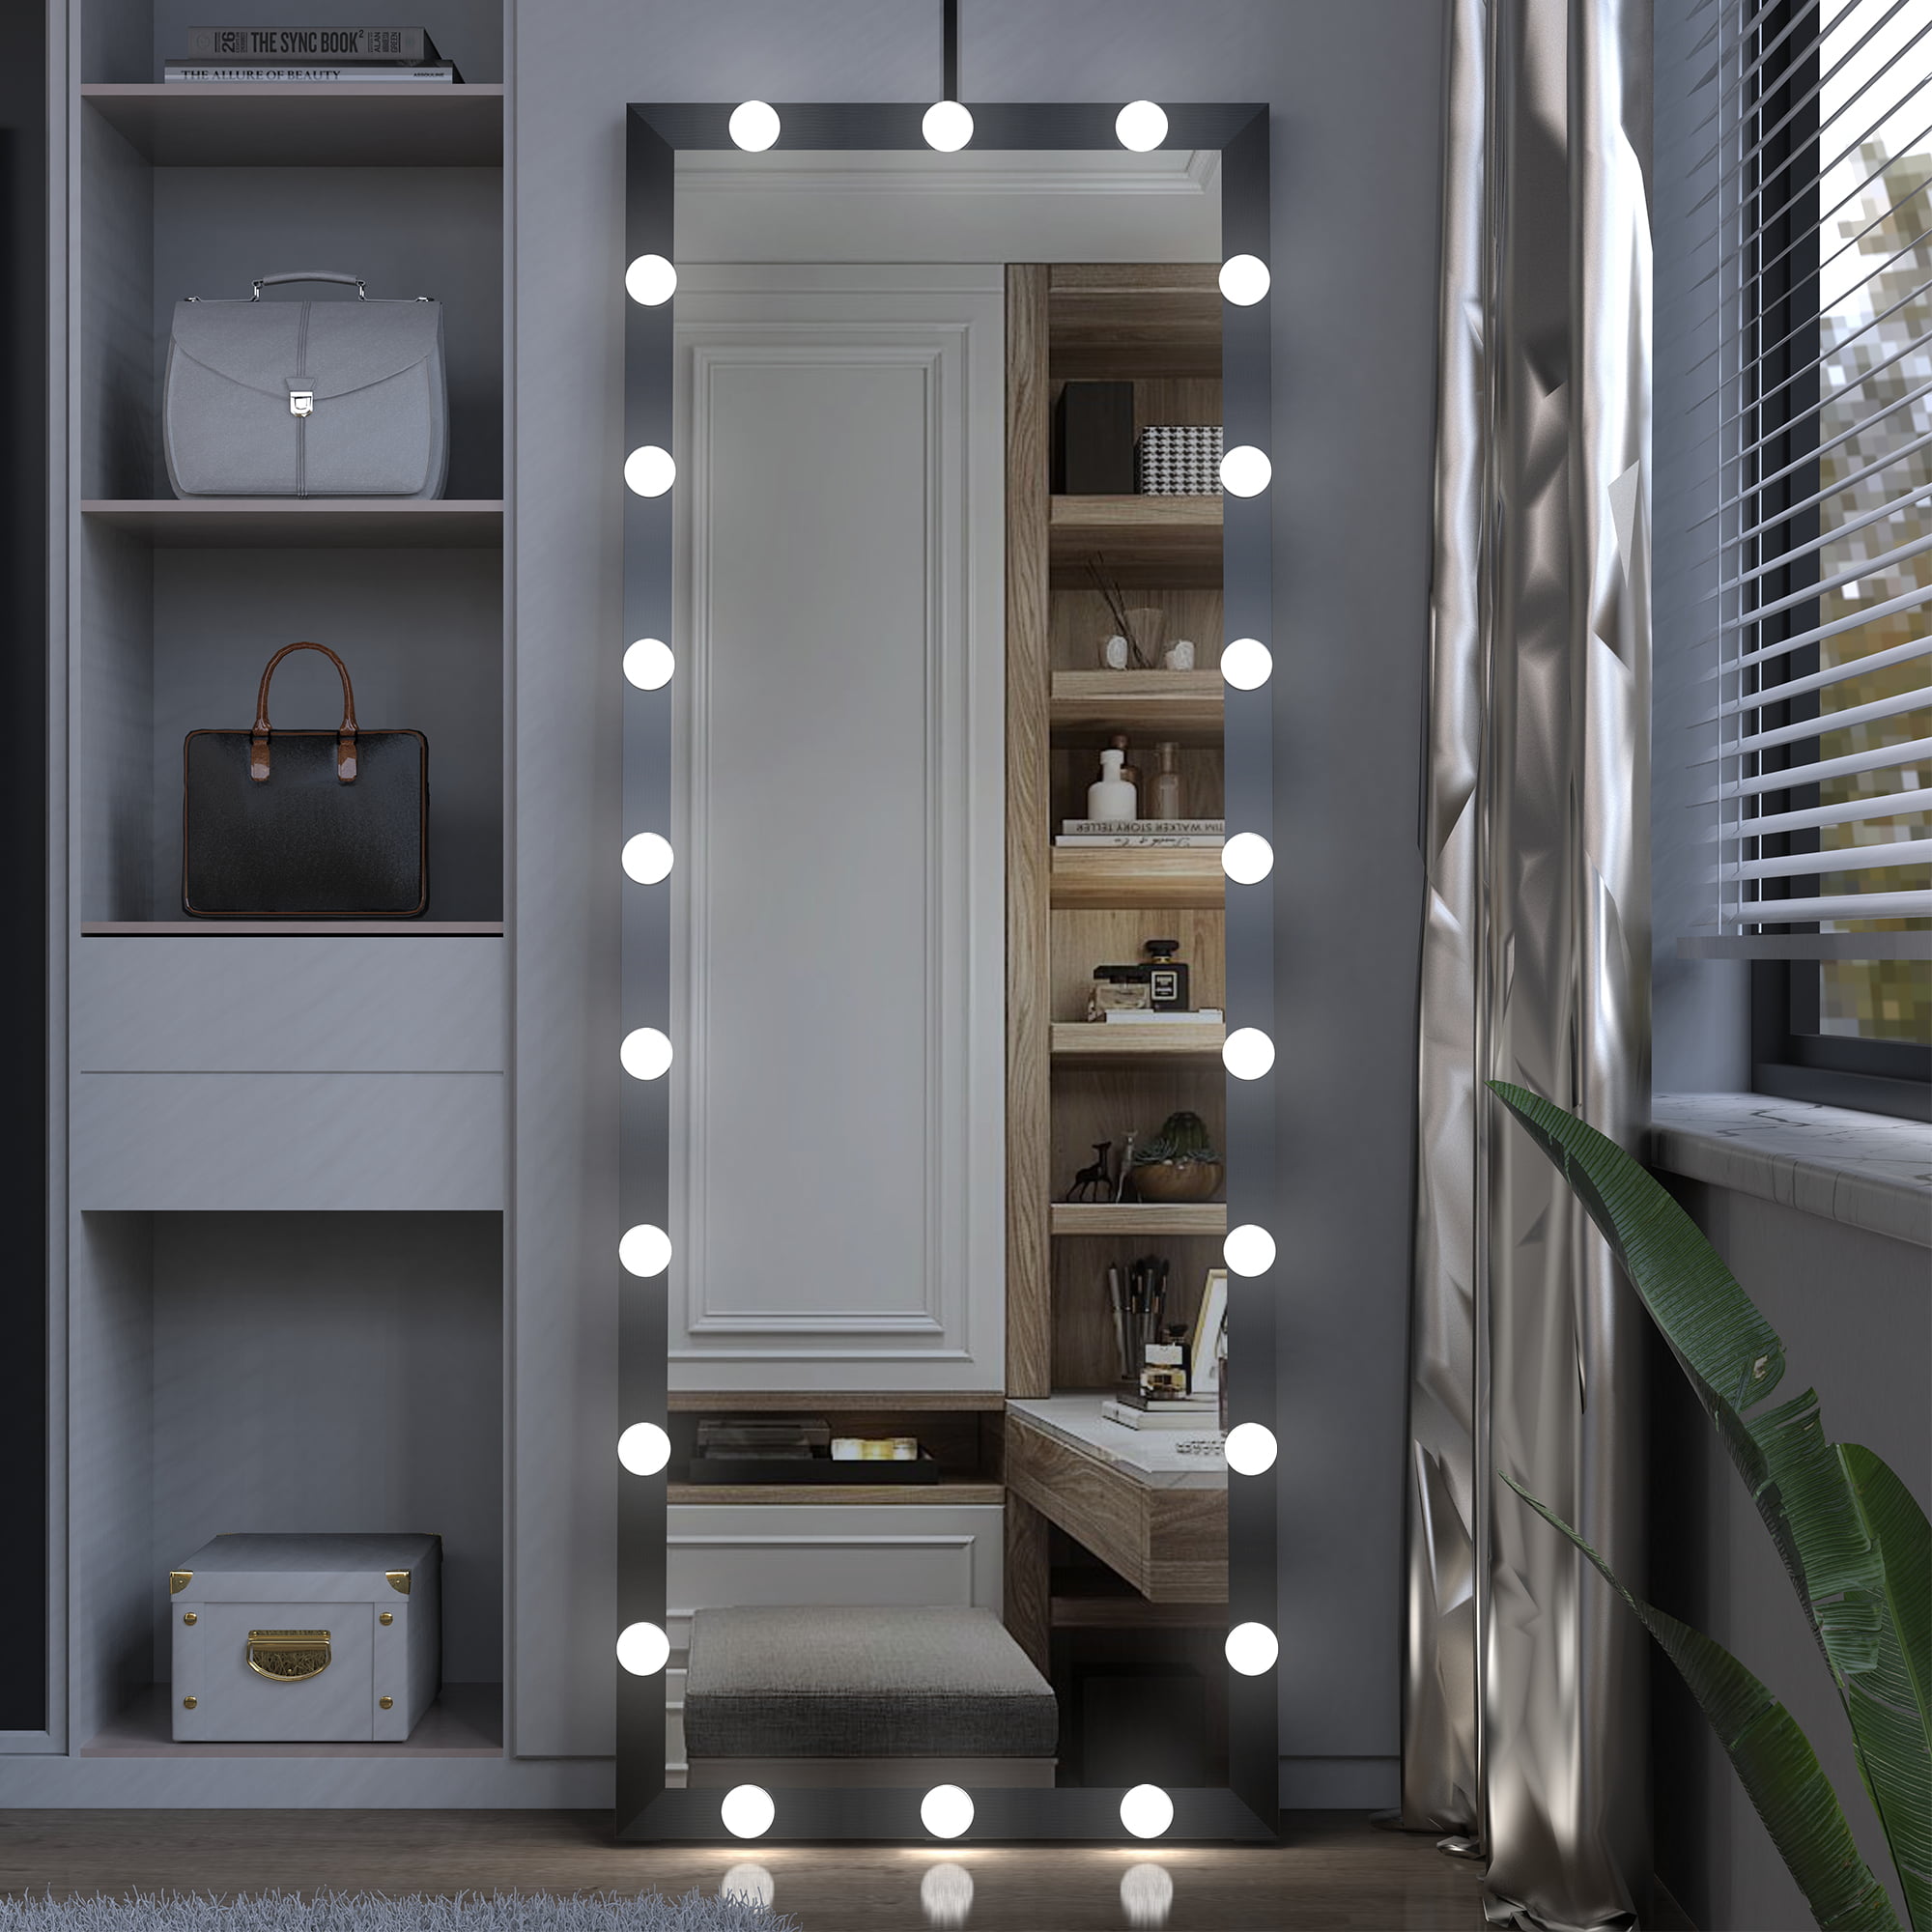 Sesslife Full Length Mirror with Stand, 63 x 20 Round Corner Standing  Mirror with Aluminum Frame, Floor Mirror Full Length for Bedroom Living  Room